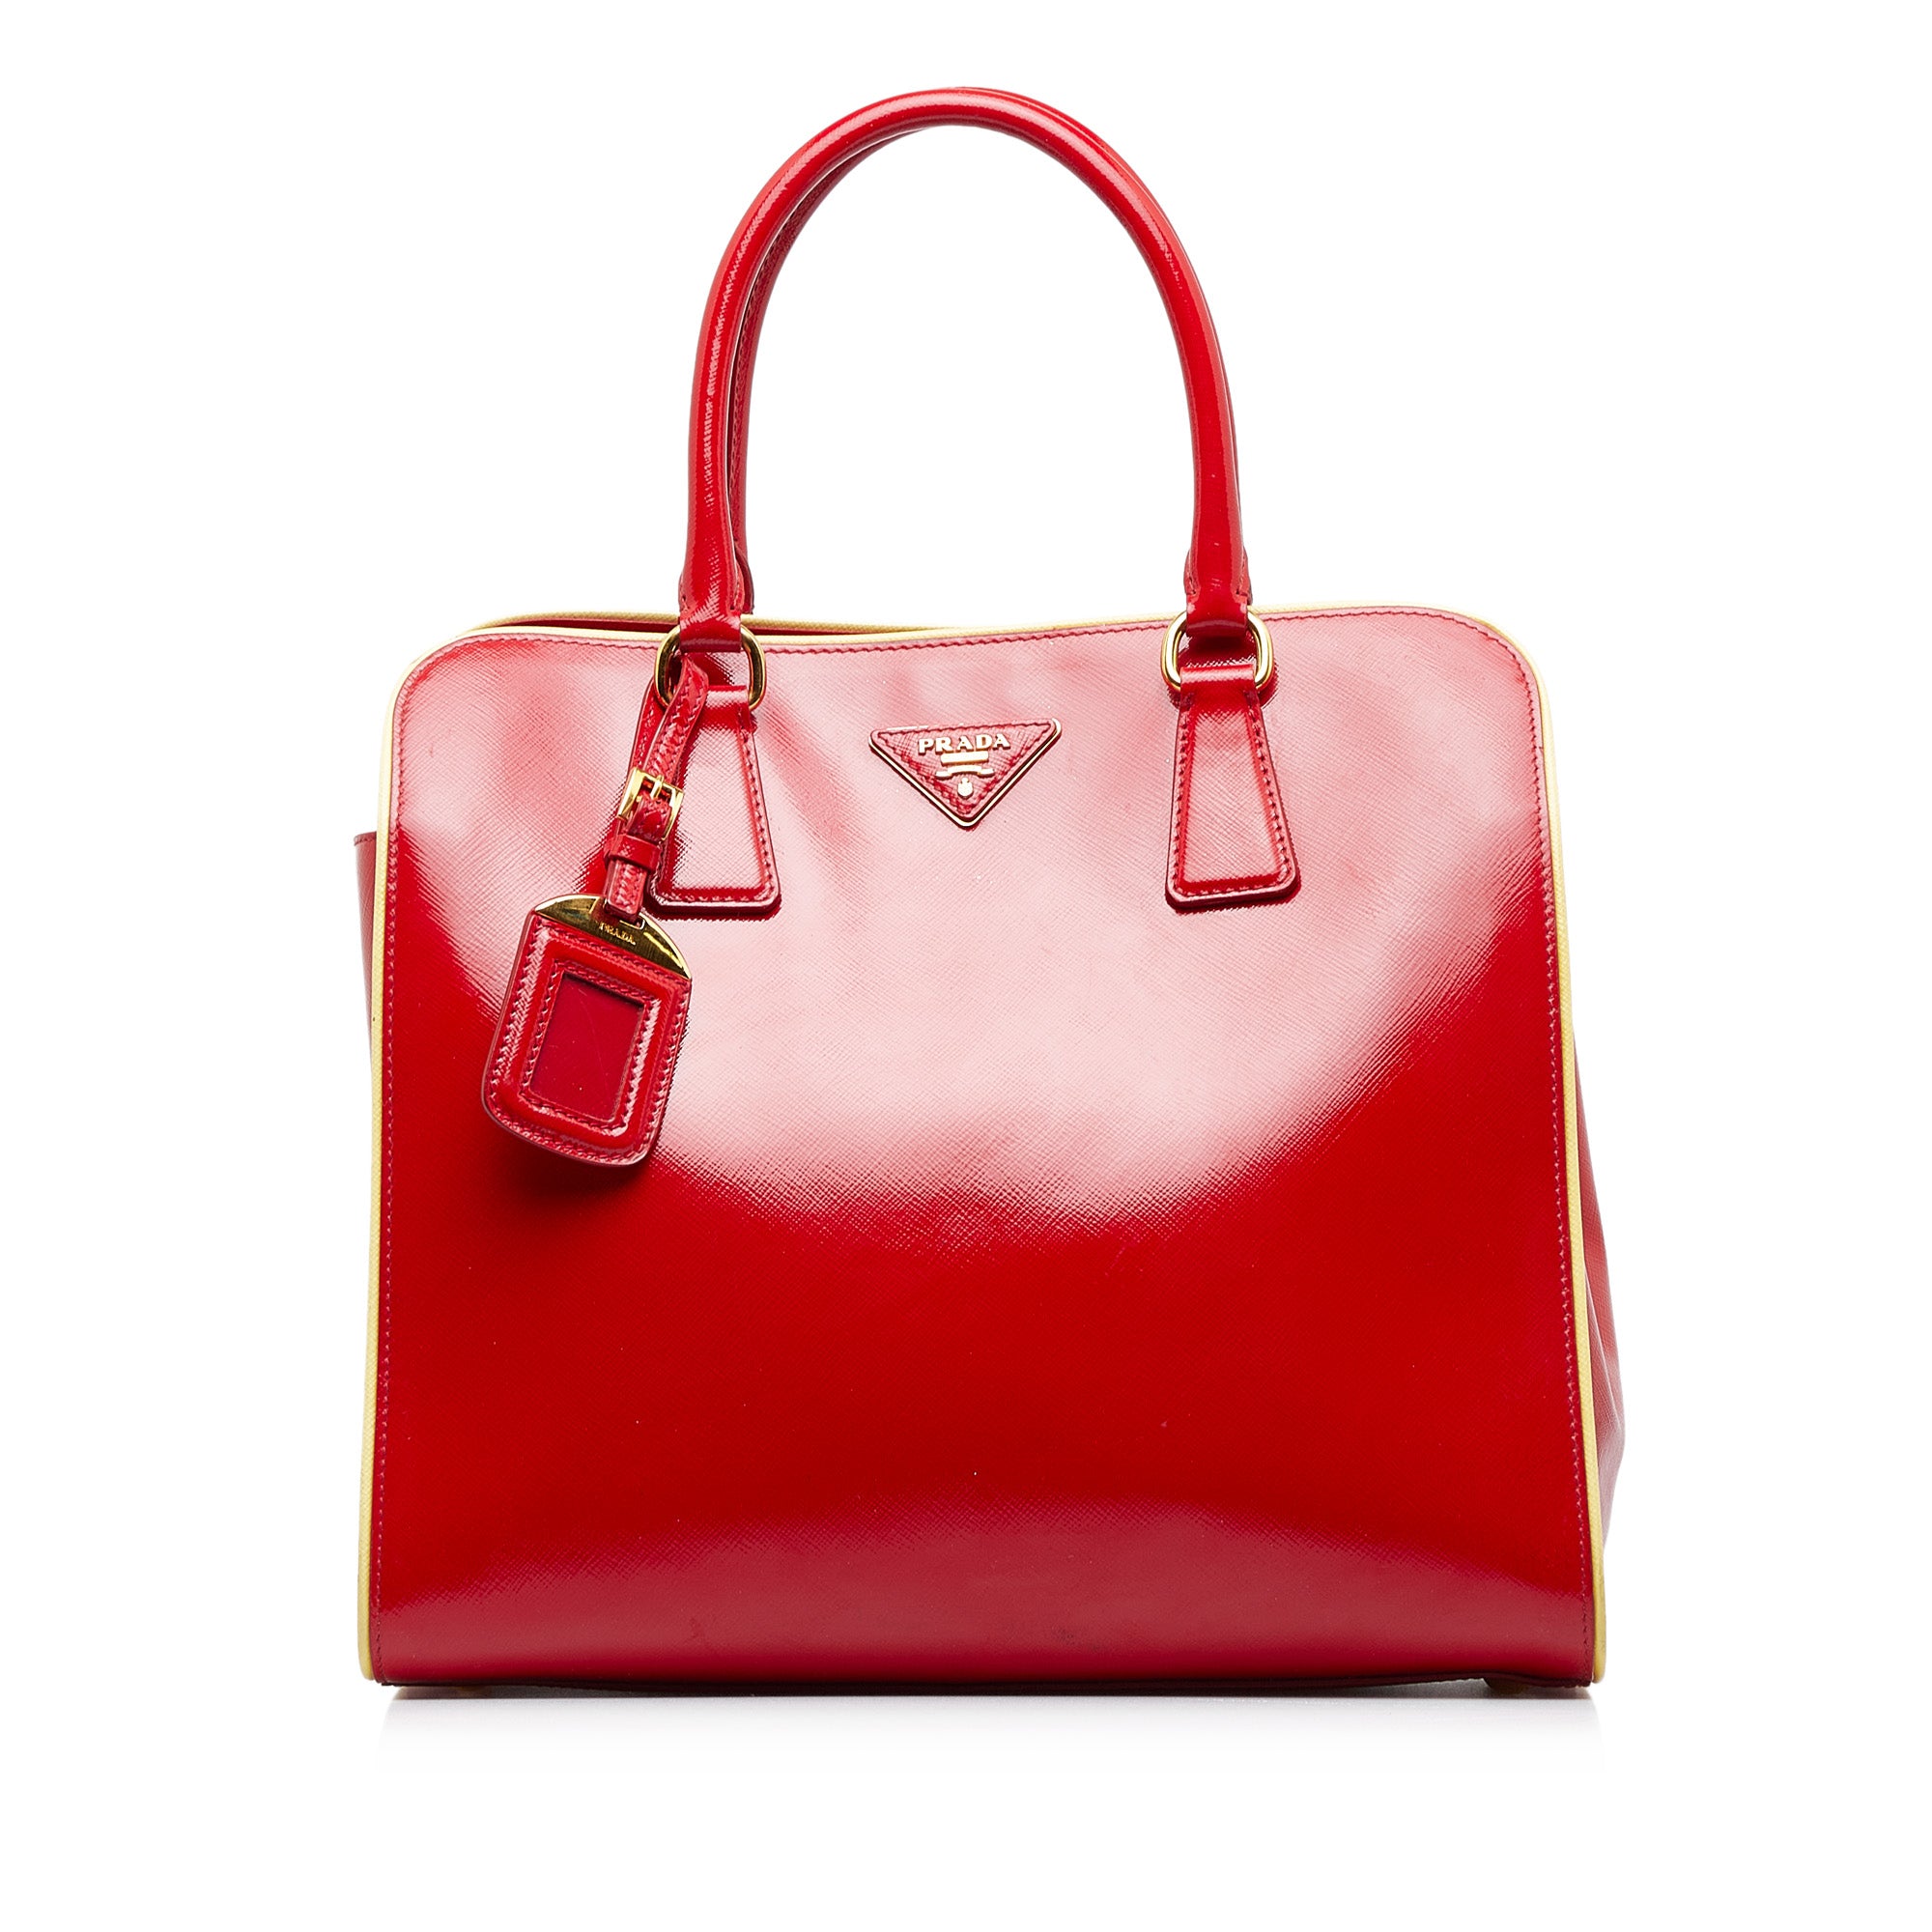 red pink prada leather handbag